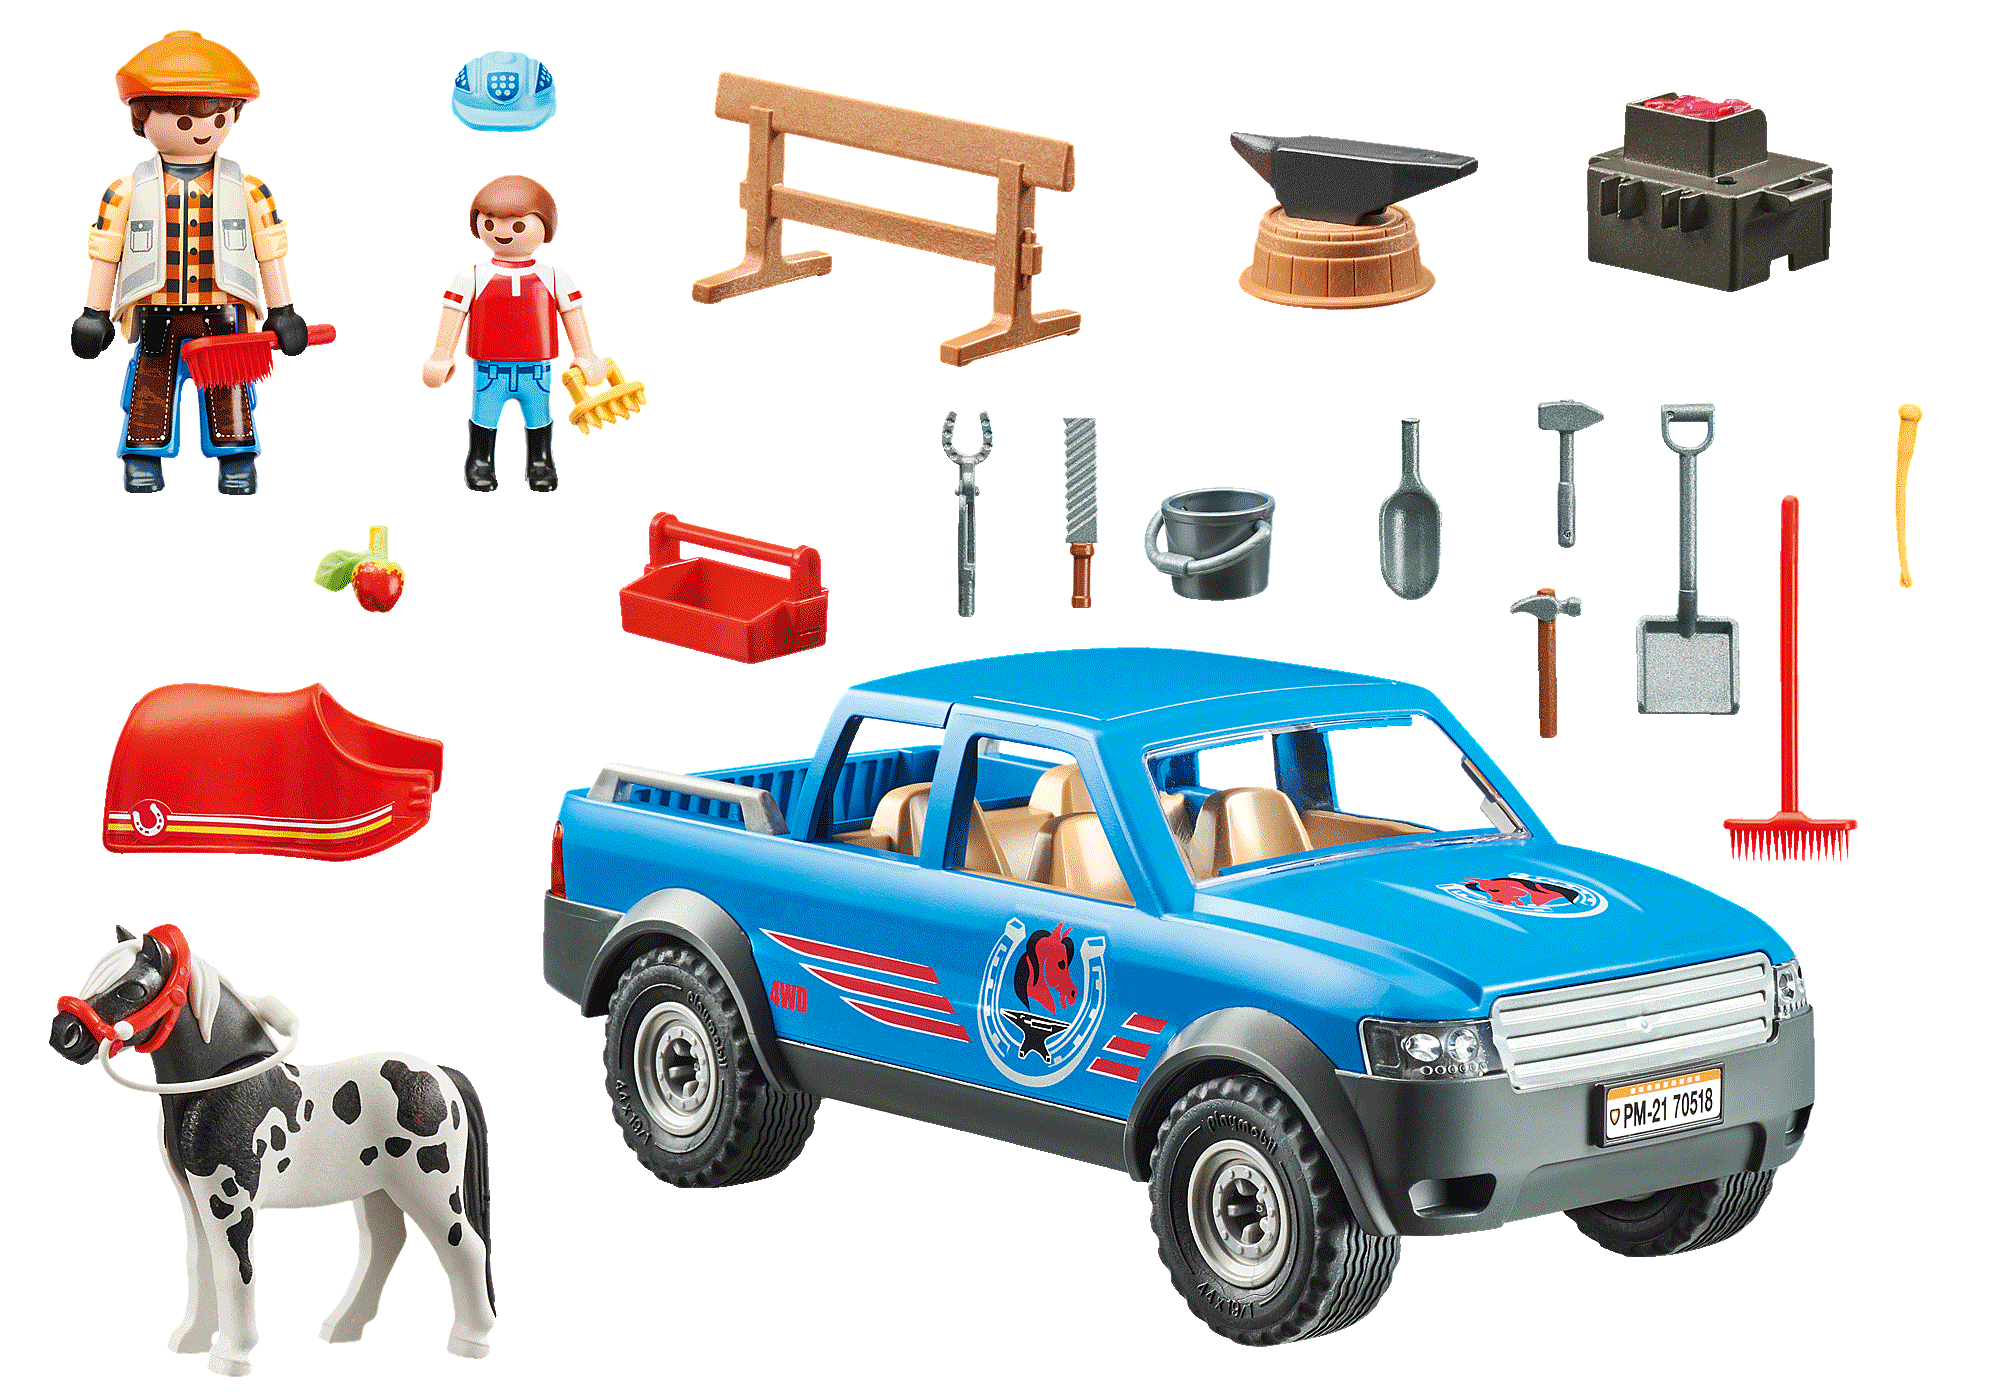 PLAYMOBIL Family Fun Pick-Up Truck Adventure -70116